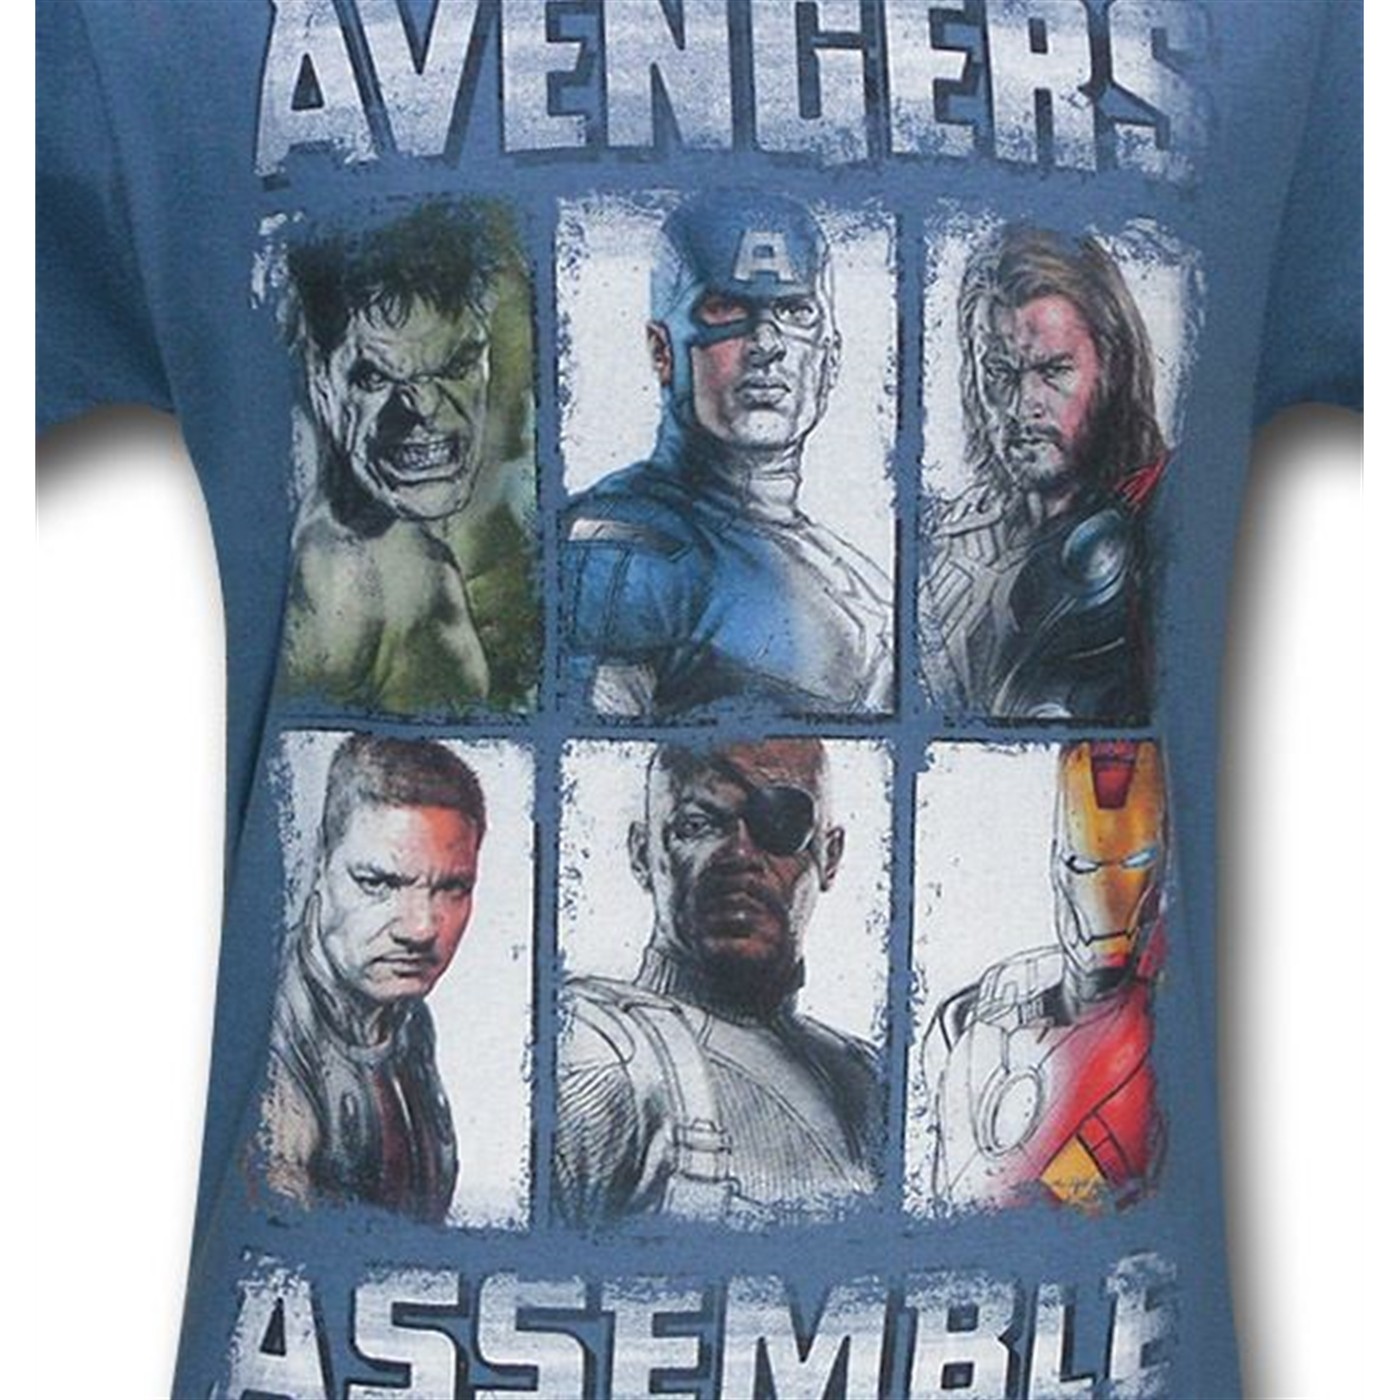 Avengers Movie Six Guns Slate T-Shirt